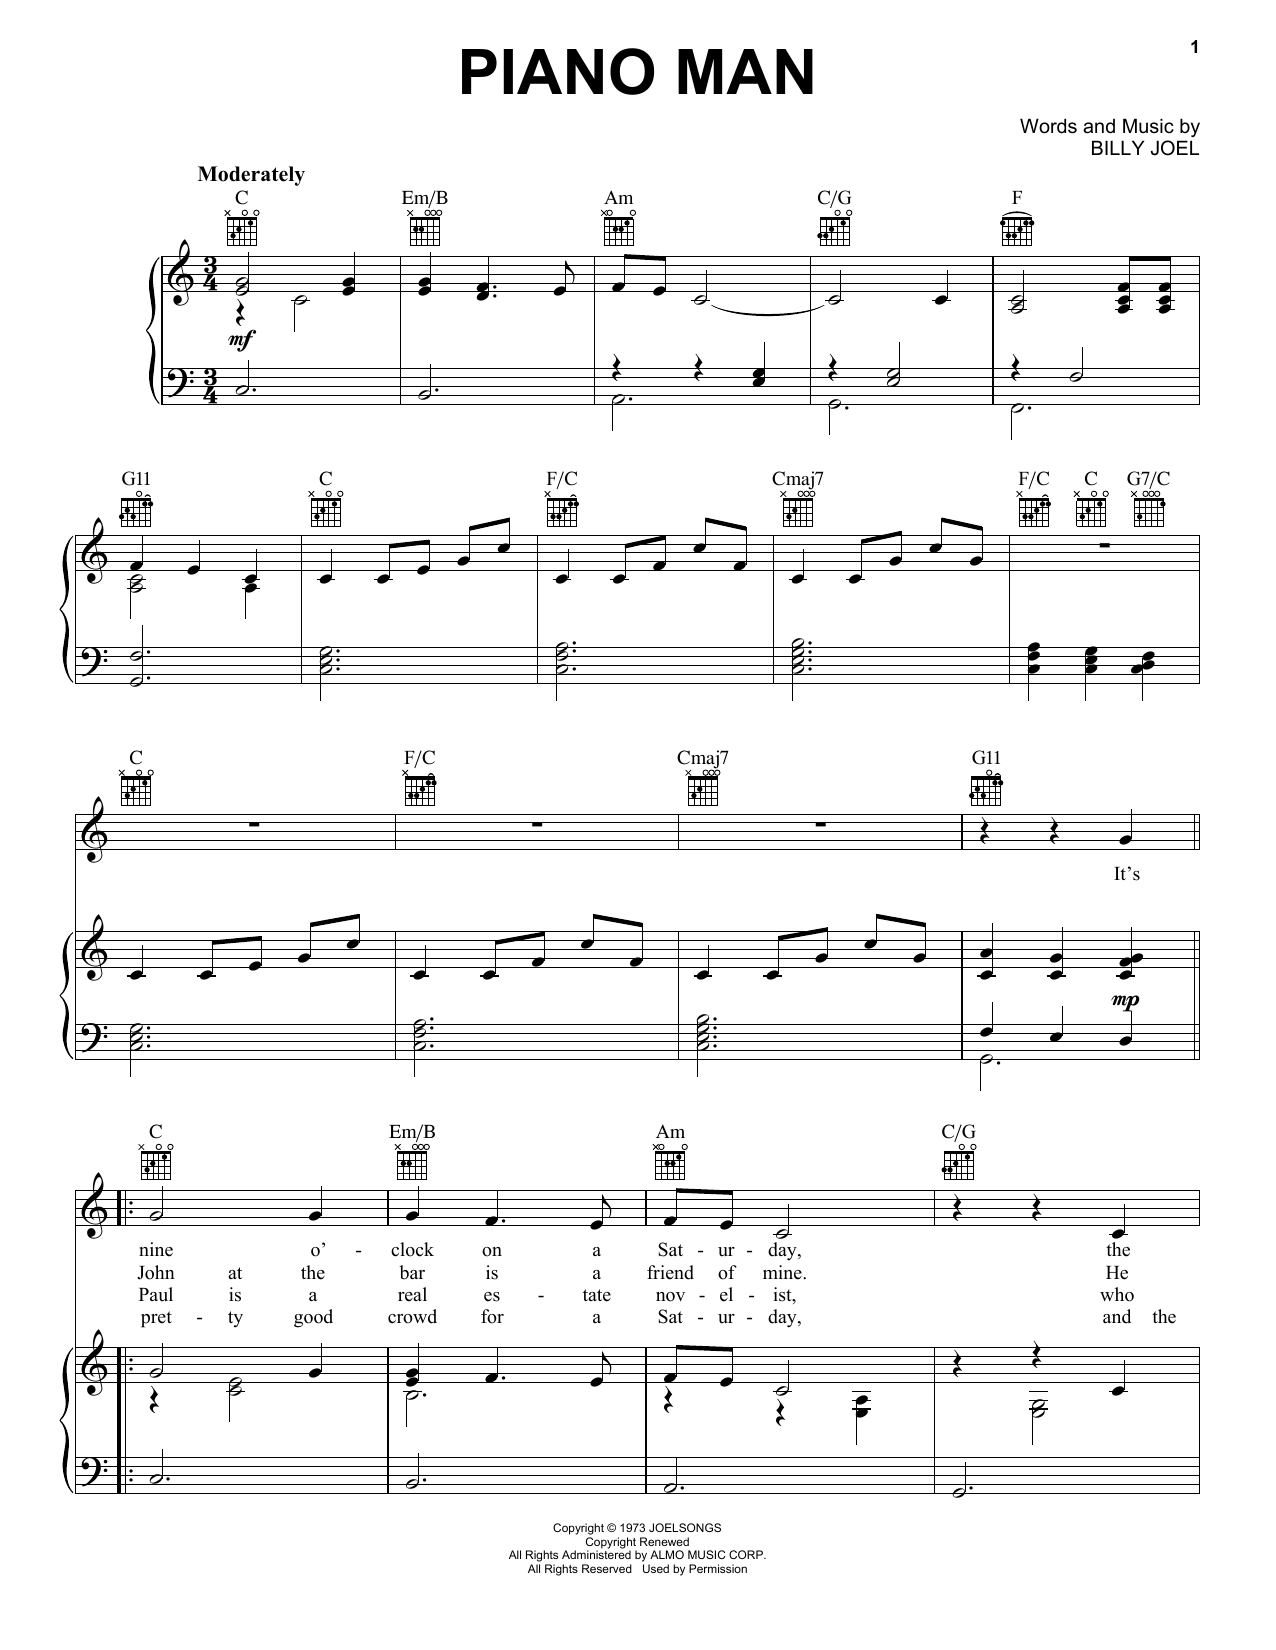 Billy Joel Piano Man sheet music notes and chords. Download Printable PDF.